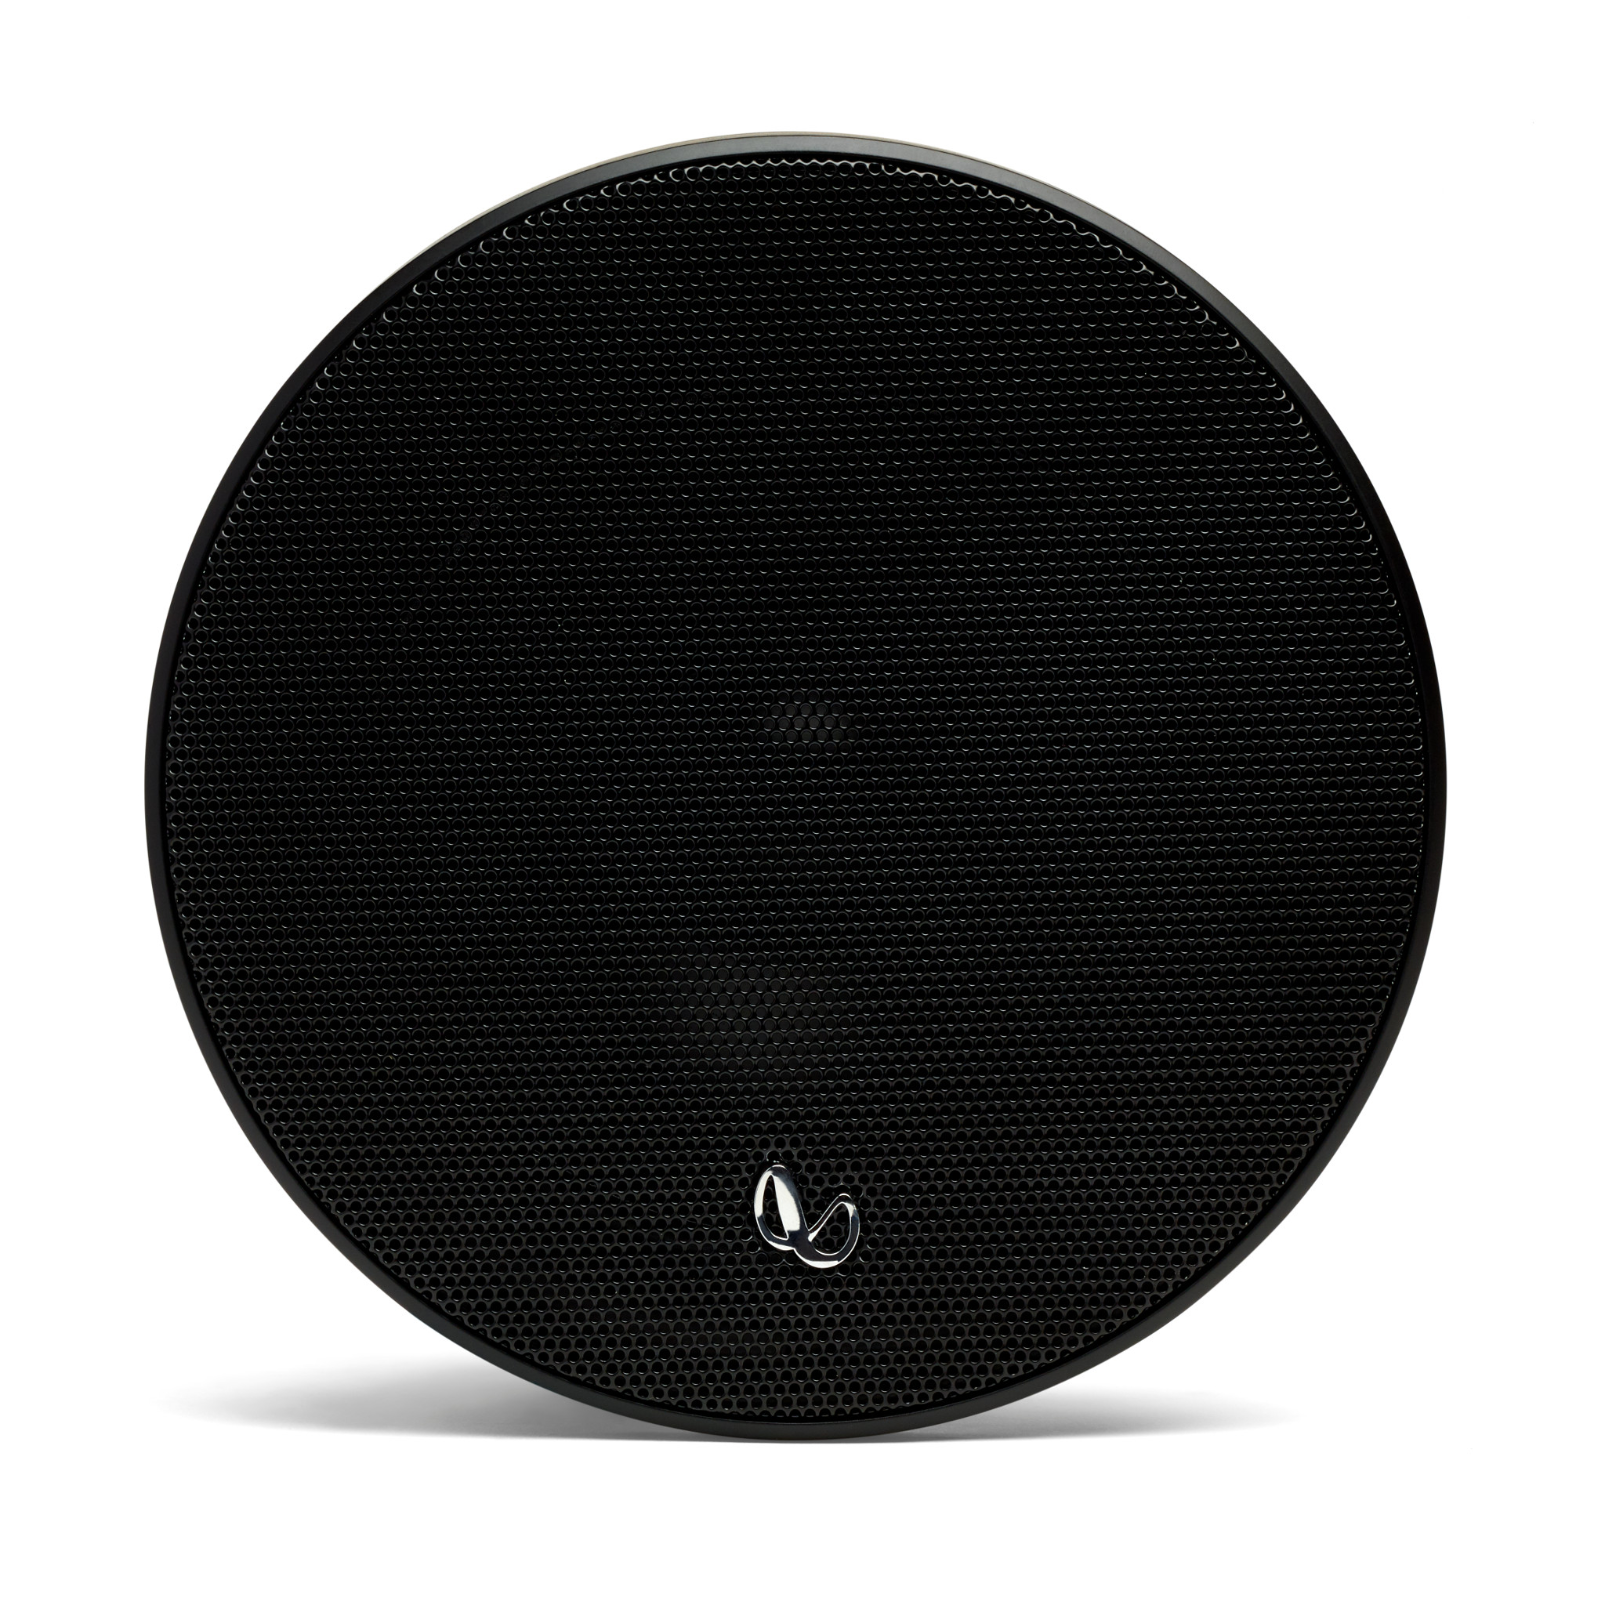 Infinity Alpha 6530 6.5” 3-Way Tri-Axial Speakers (Black)